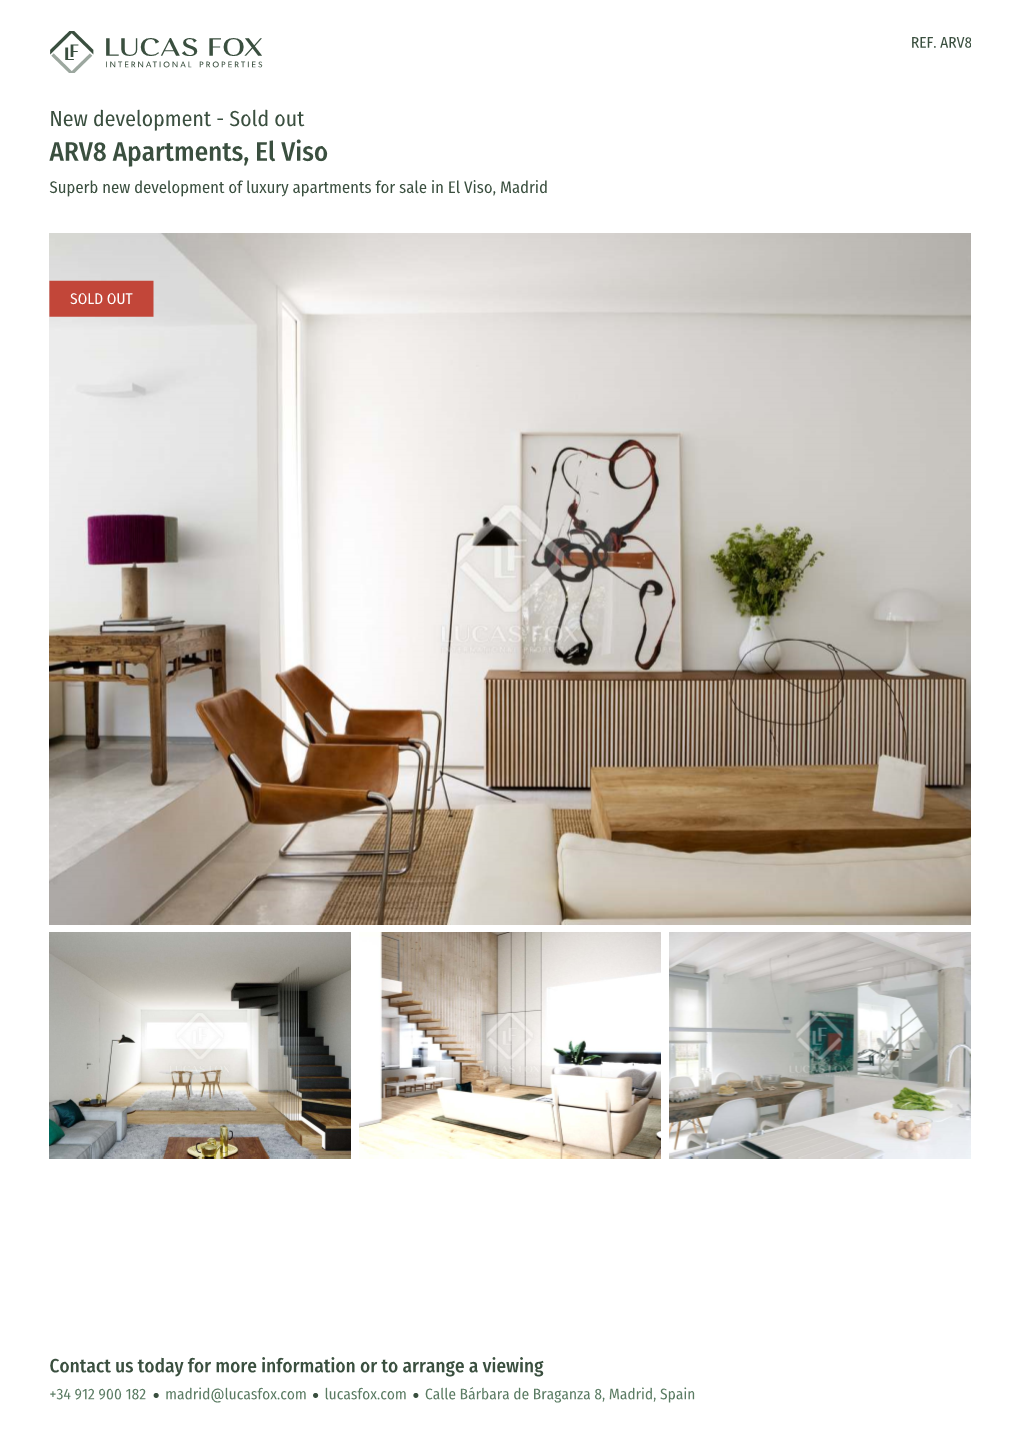 ARV8 Apartments, El Viso Superb New Development of Luxury Apartments for Sale in El Viso, Madrid